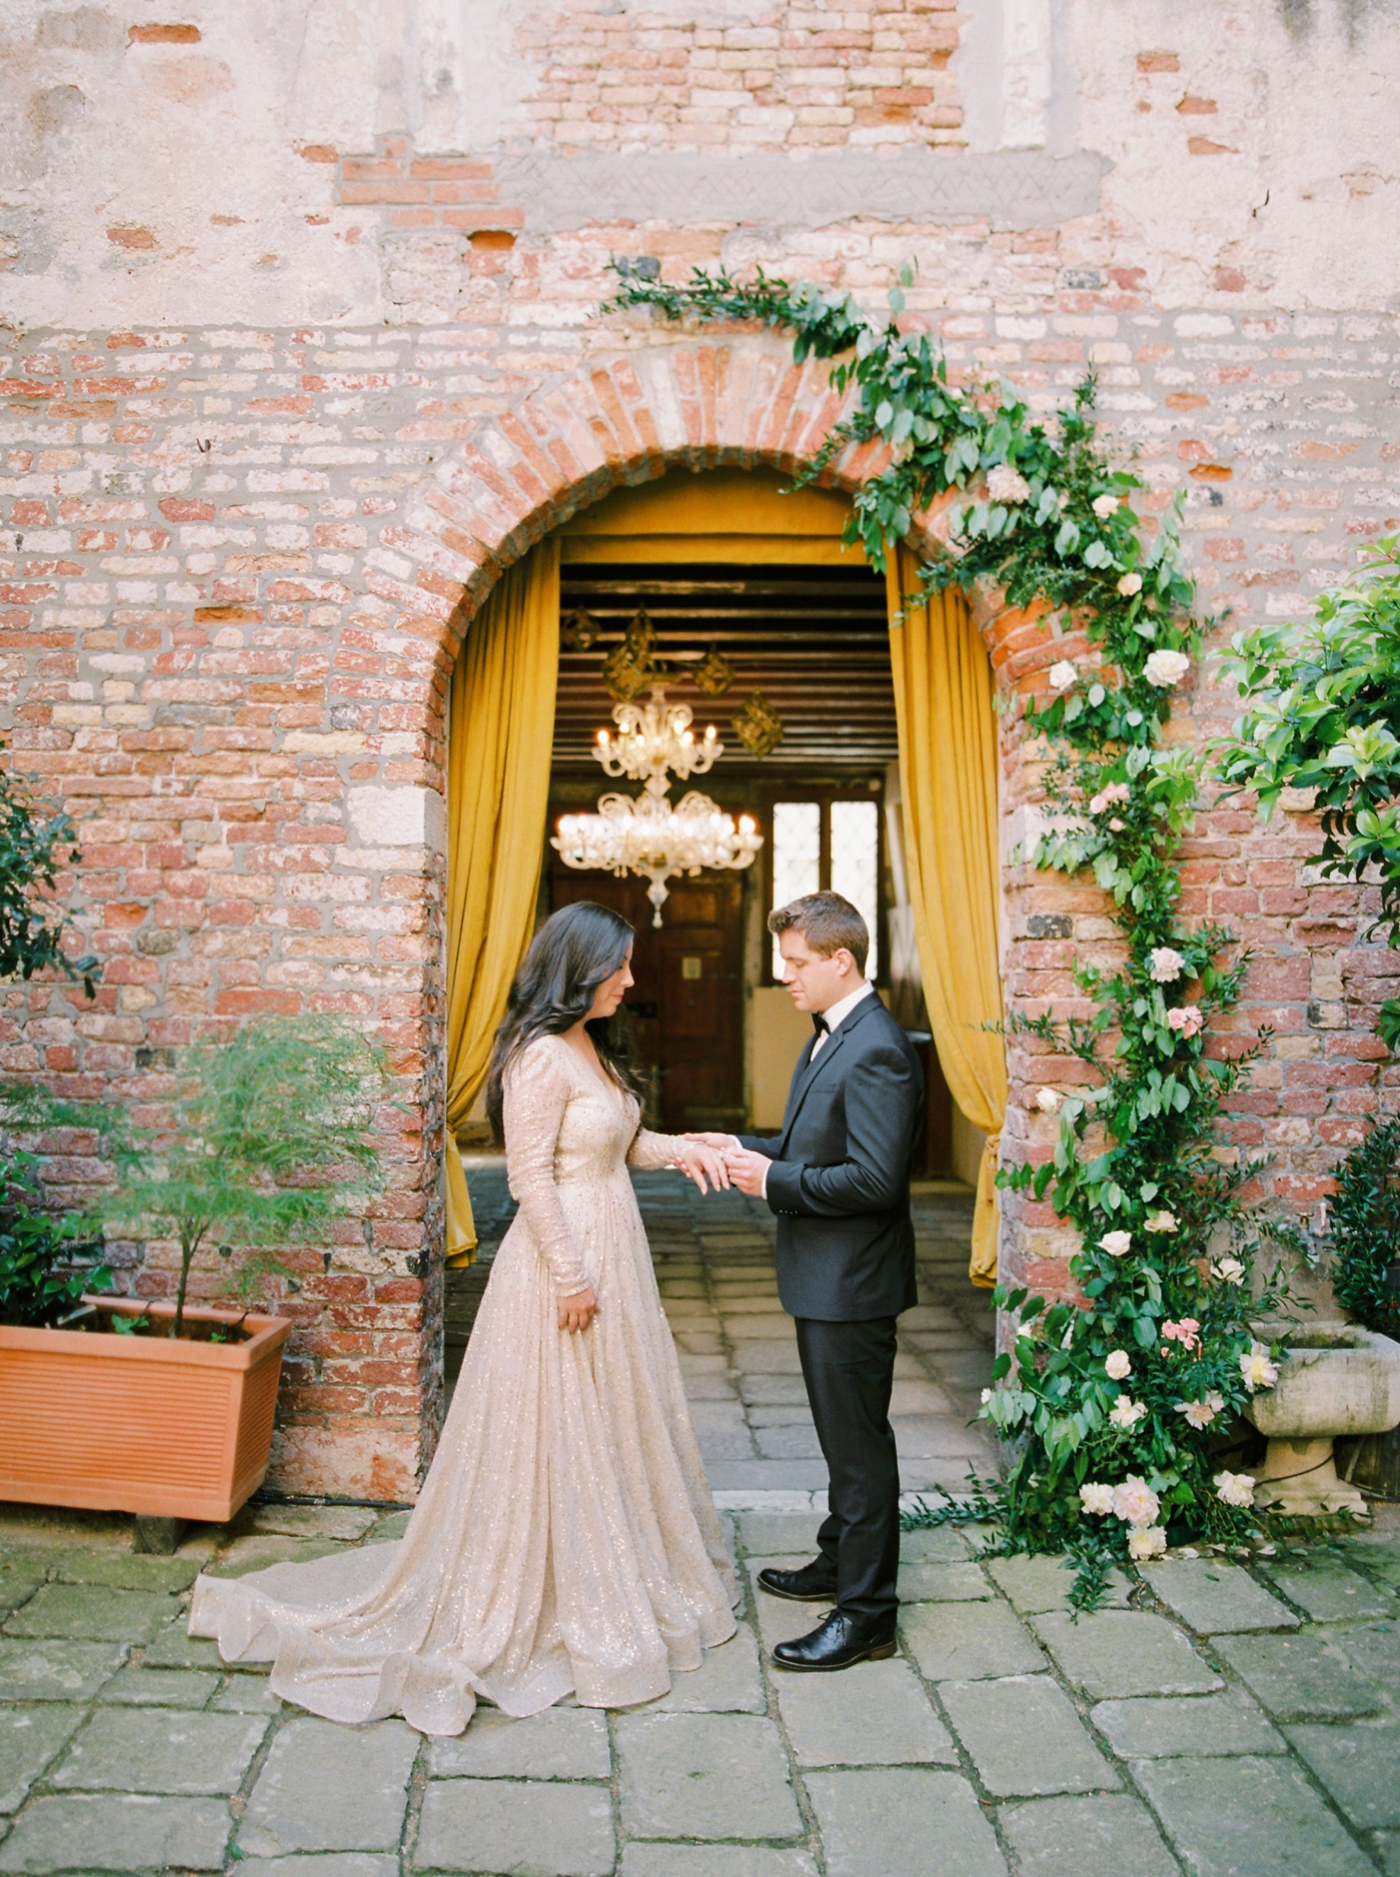 Venice italy wedding photographers | long sleeve wedding dress | italy vow renewal | justine milton fine art film photographer |vow renewal ceremony